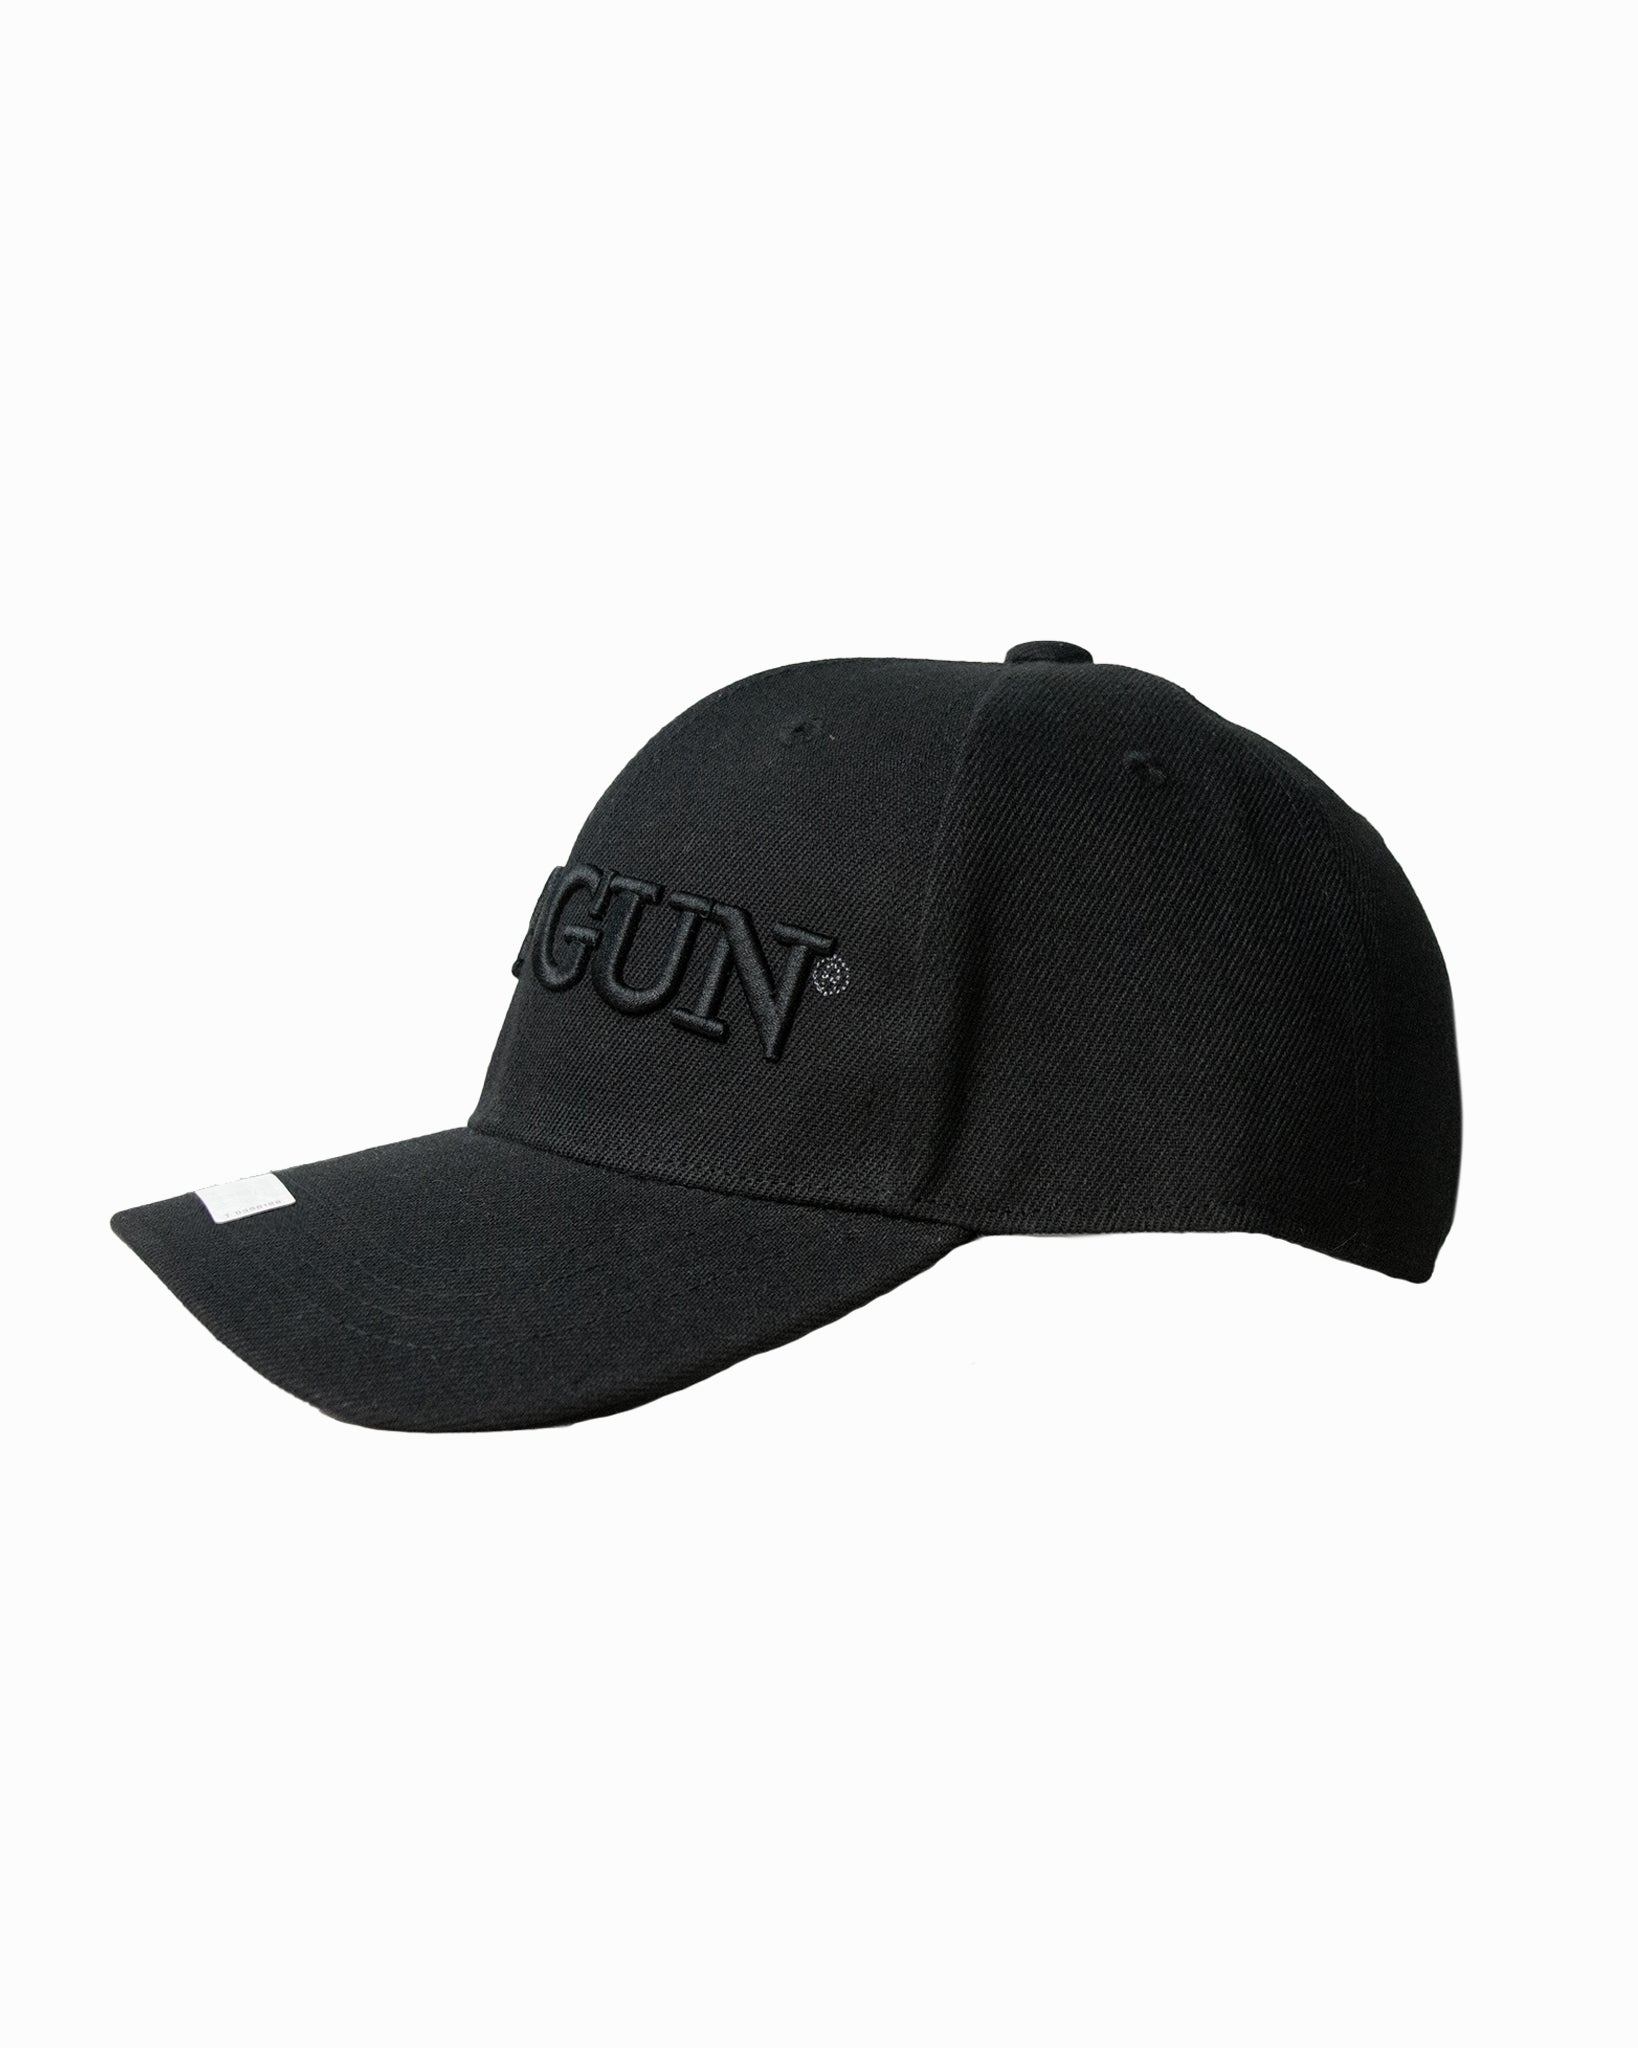 Top Gun: Maverick Caps | | Official Top Store and Cap, Gun Trucker More Beanie, Hat, – Store